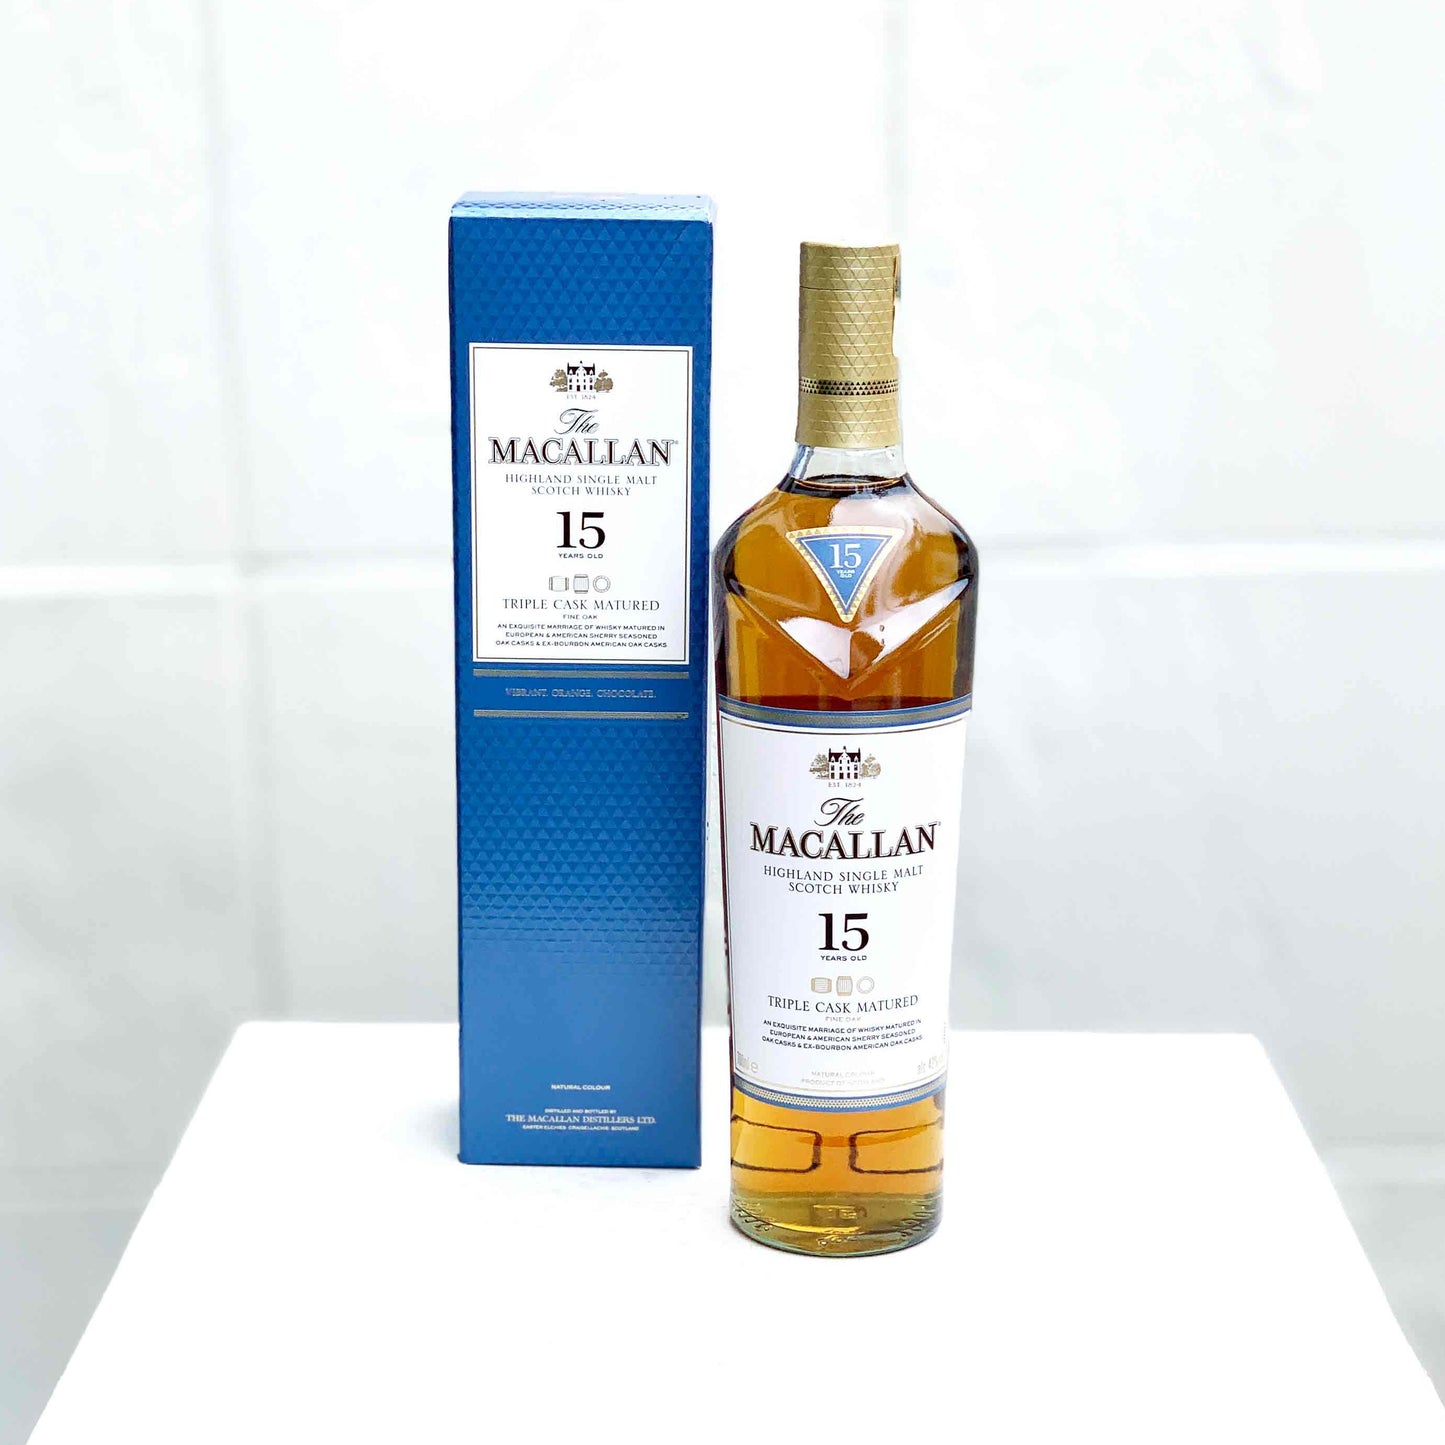 The Macallan 15 Year Old Triple Cask Matured Single Malt Scotch Whisky